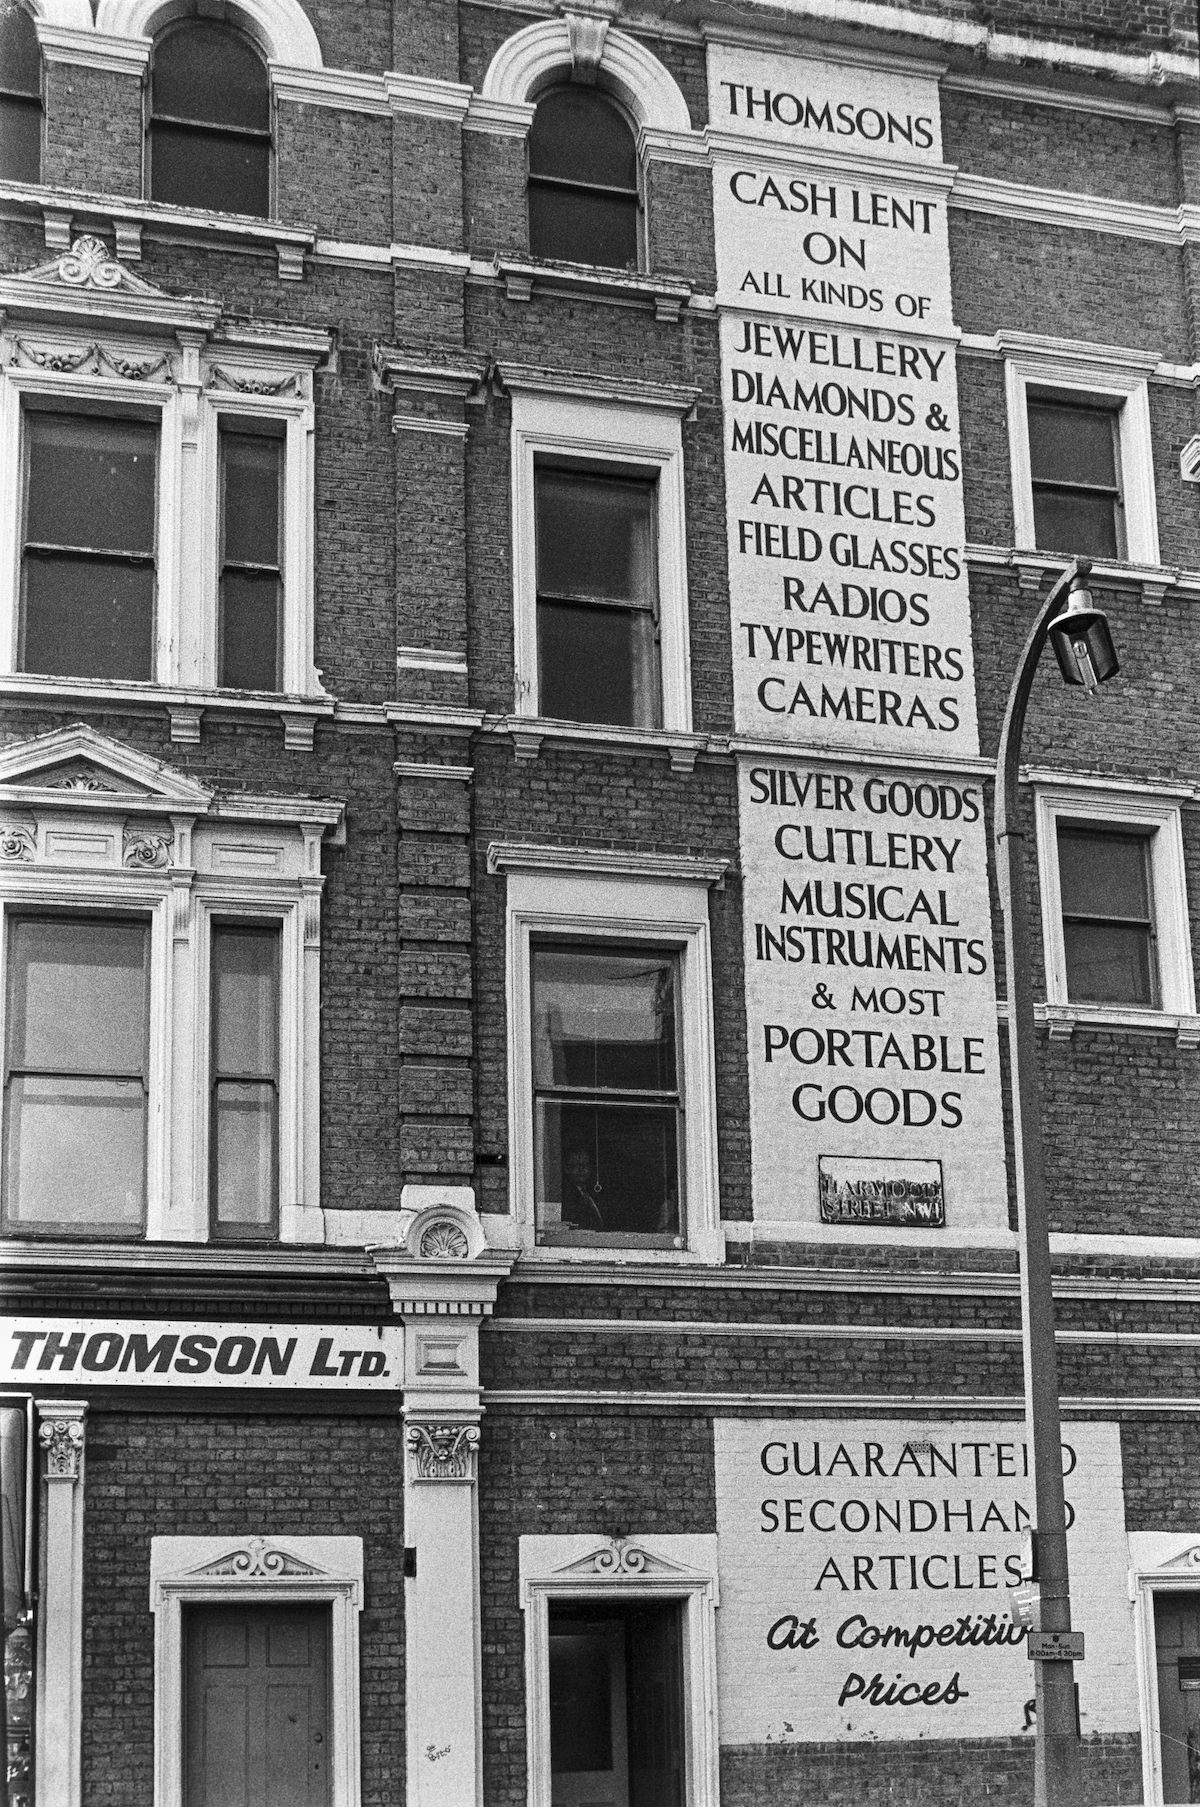 Thomsons, Harmood St, Camden, 1986